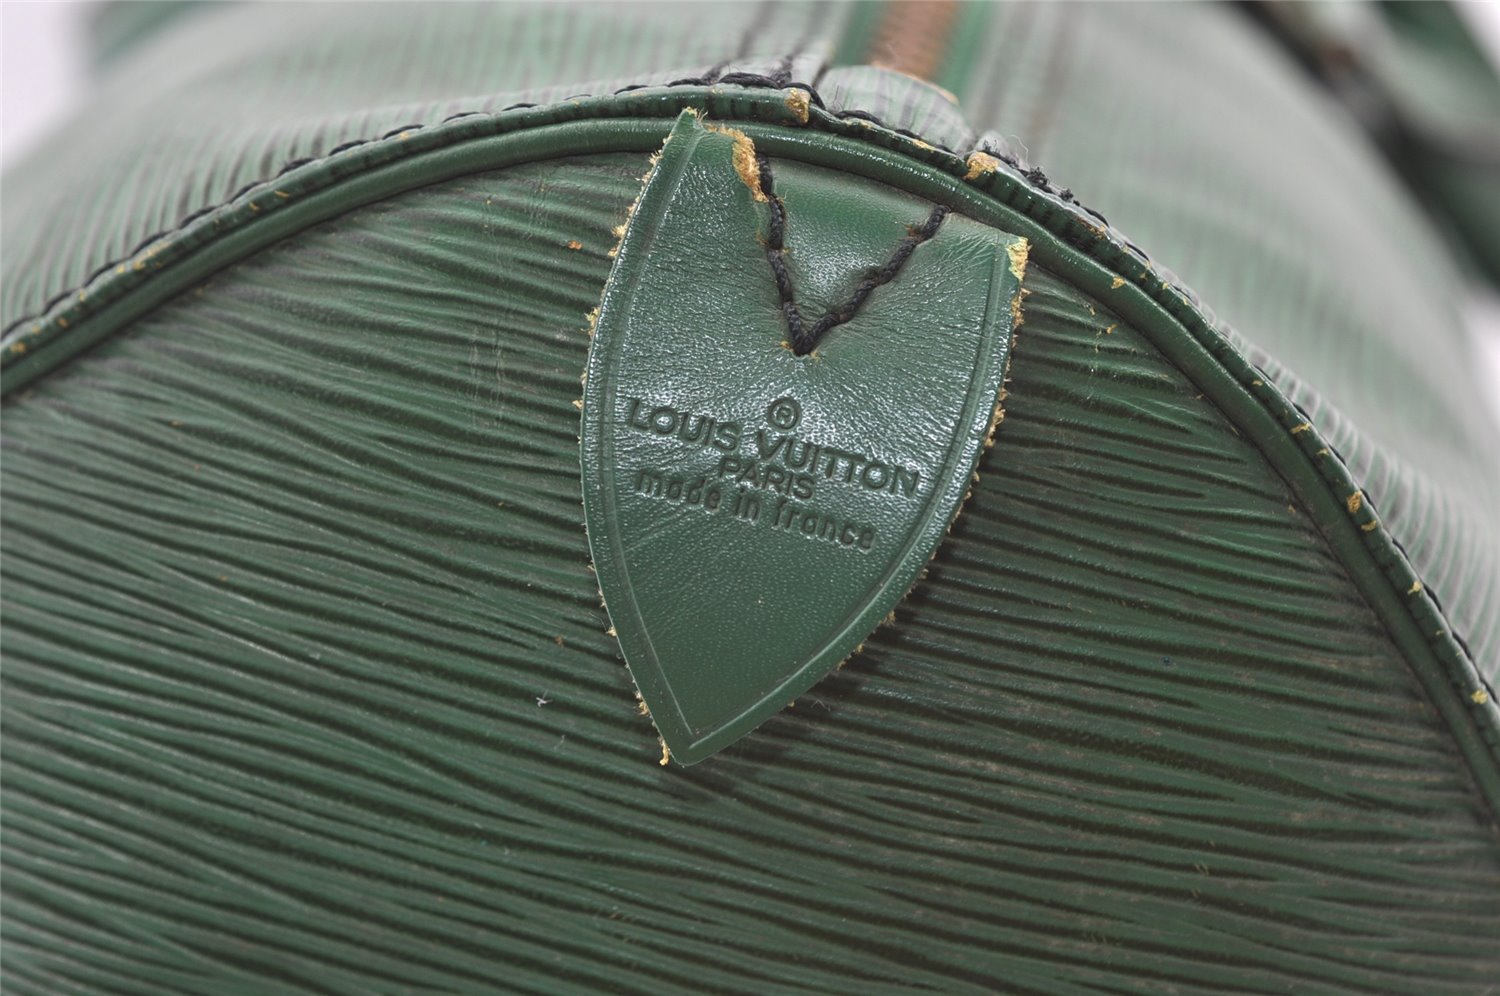 Authentic Louis Vuitton Epi Keepall 50 Boston Travel Bag Green M42964 LV 0661K